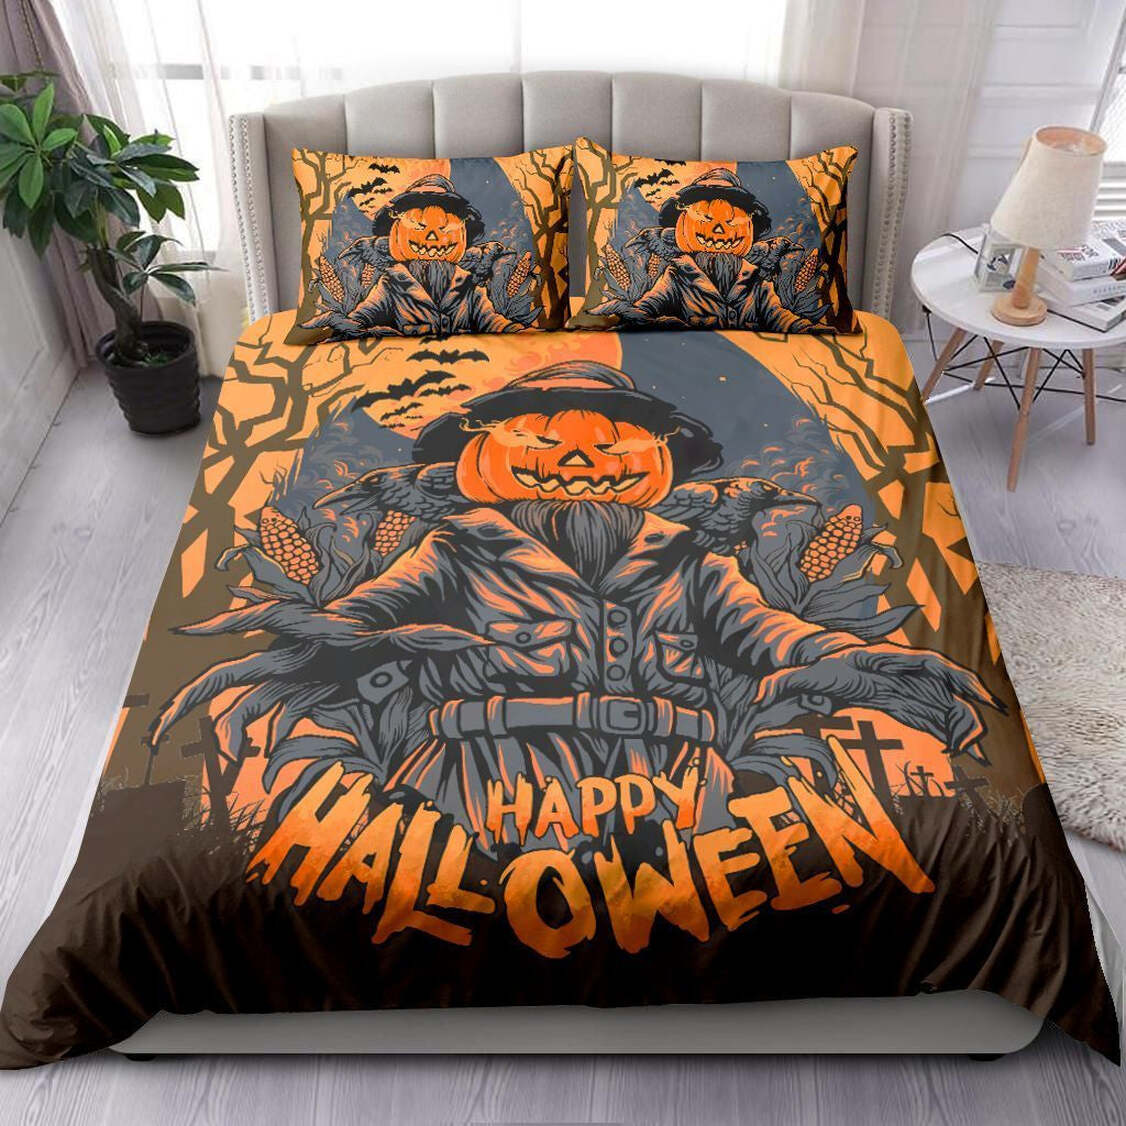 Cool Straw Man Quilt Bedding Set - Happy Halloween Quilt Bed Set Comforter Home Room Decoration